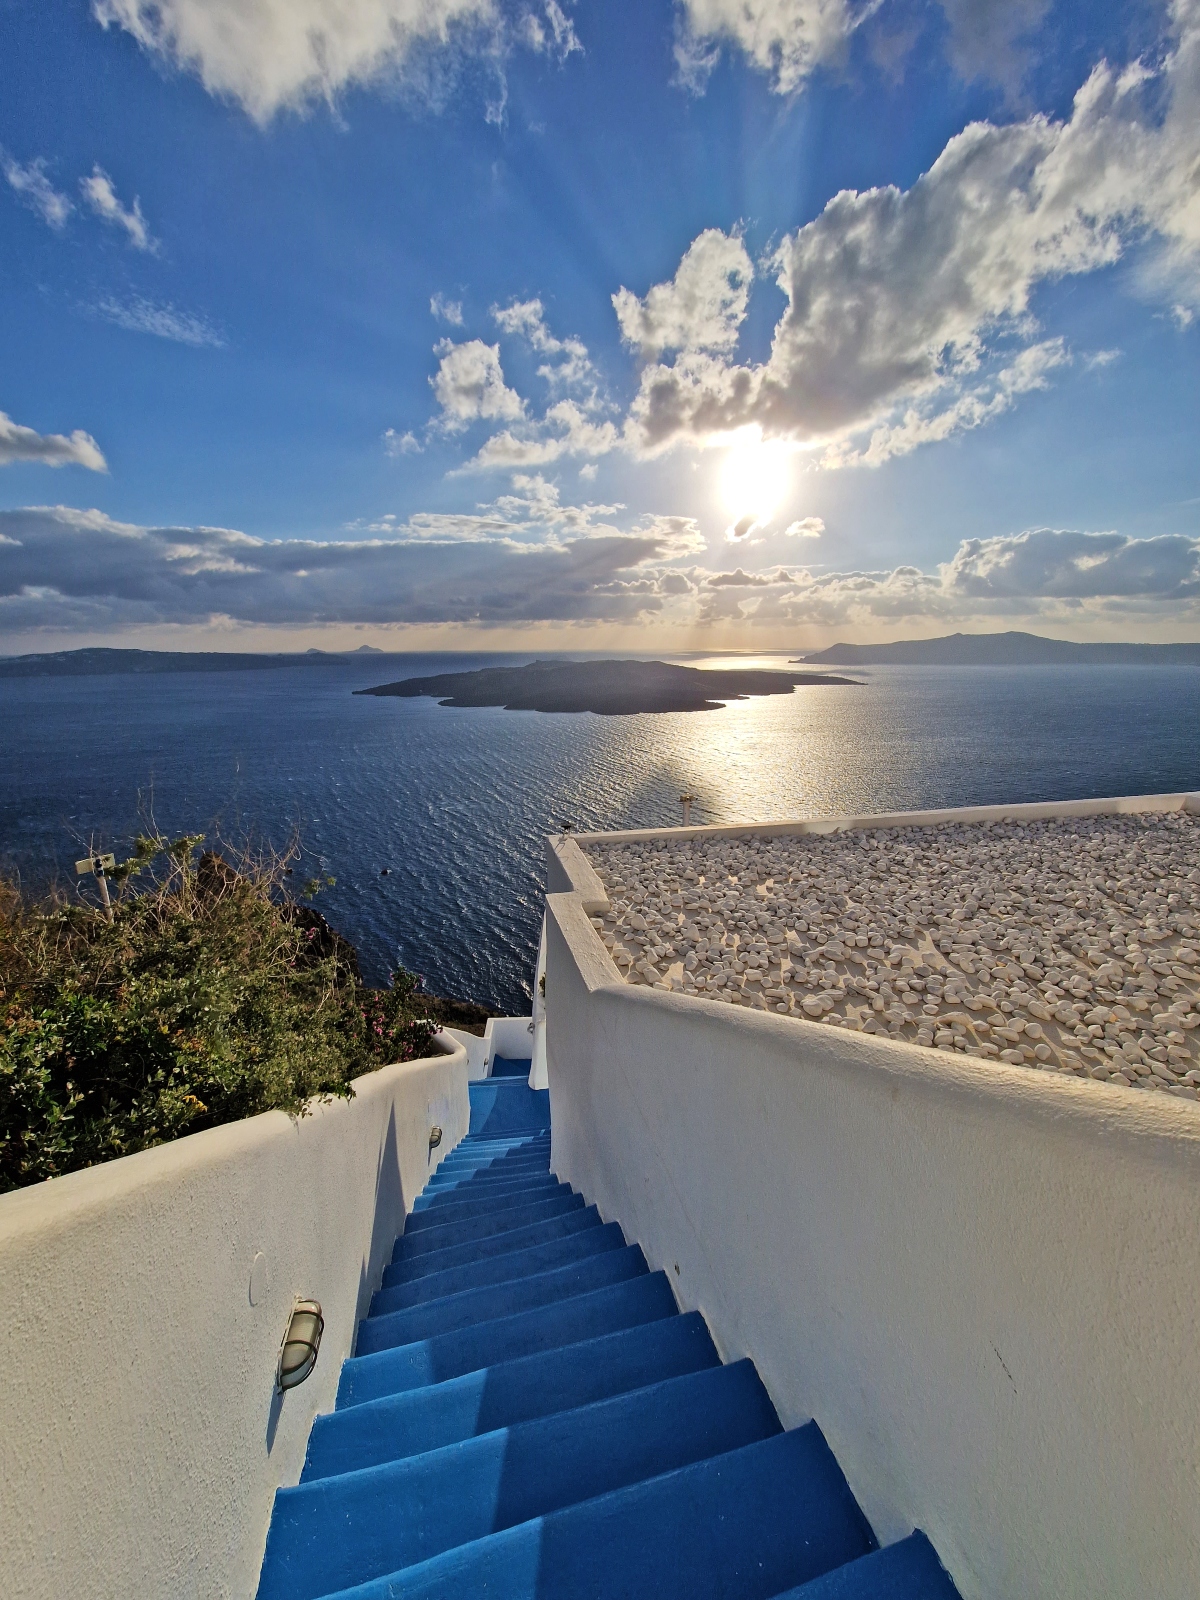 A view of Santorini in Greece